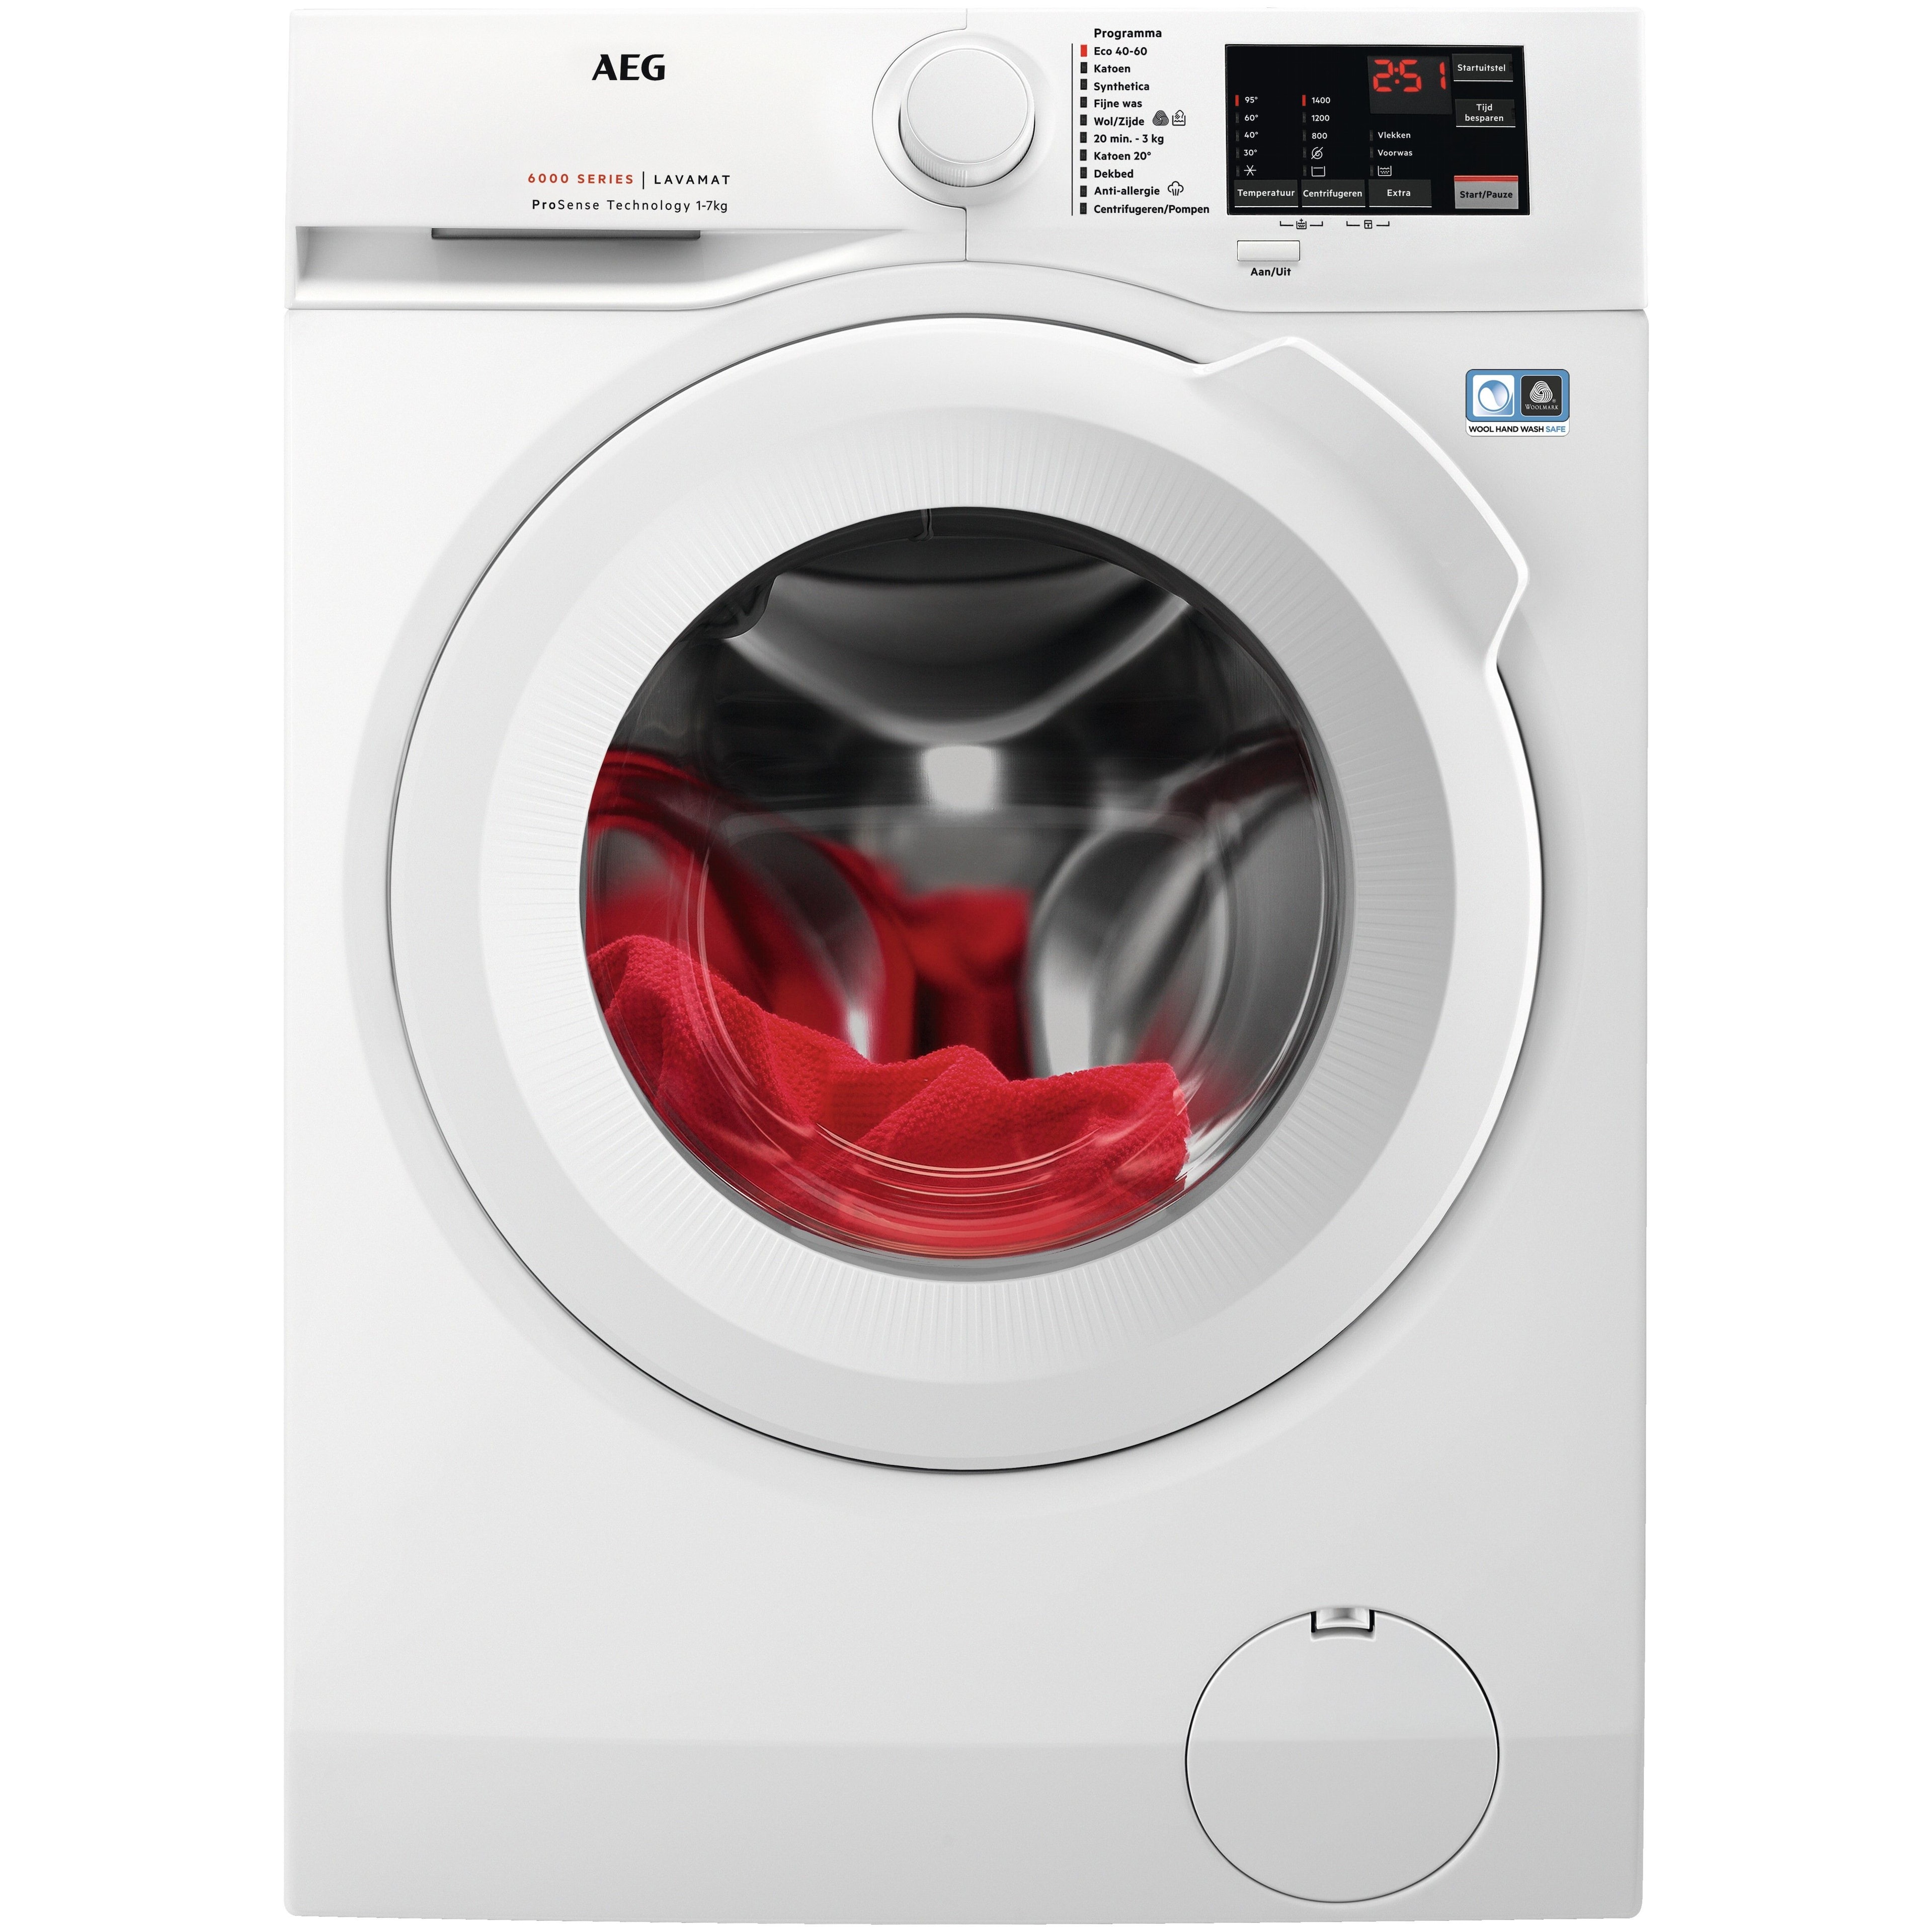 AEG LF627400 wasmachine afbeelding 1